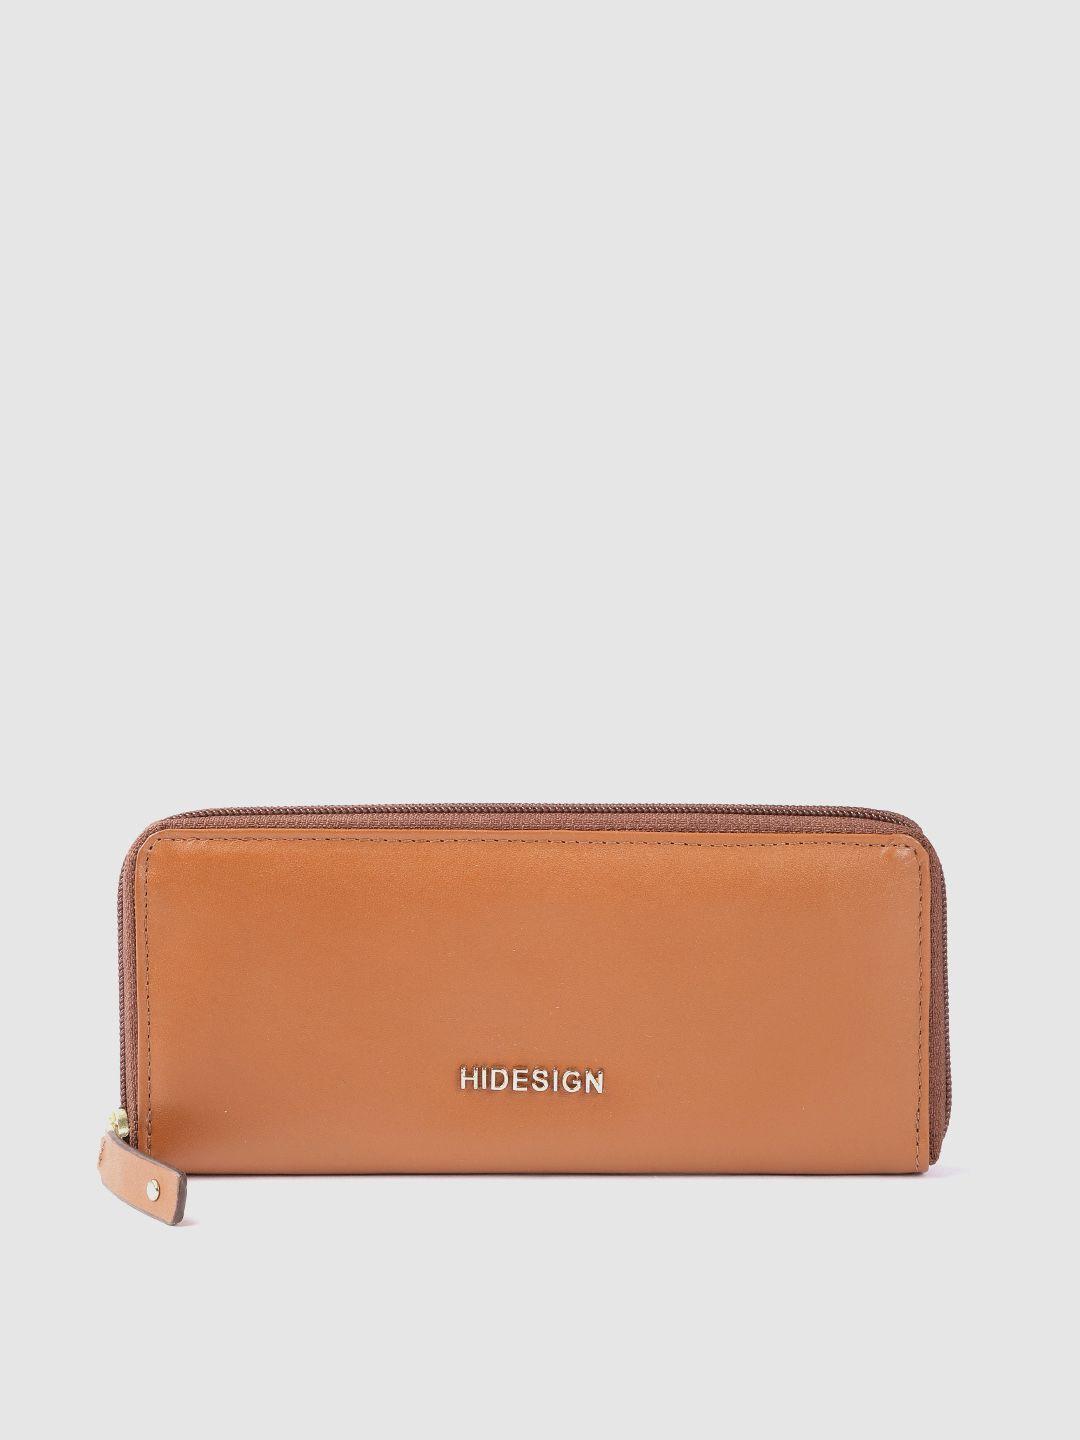 hidesign-women-leather-zip-around-wallet